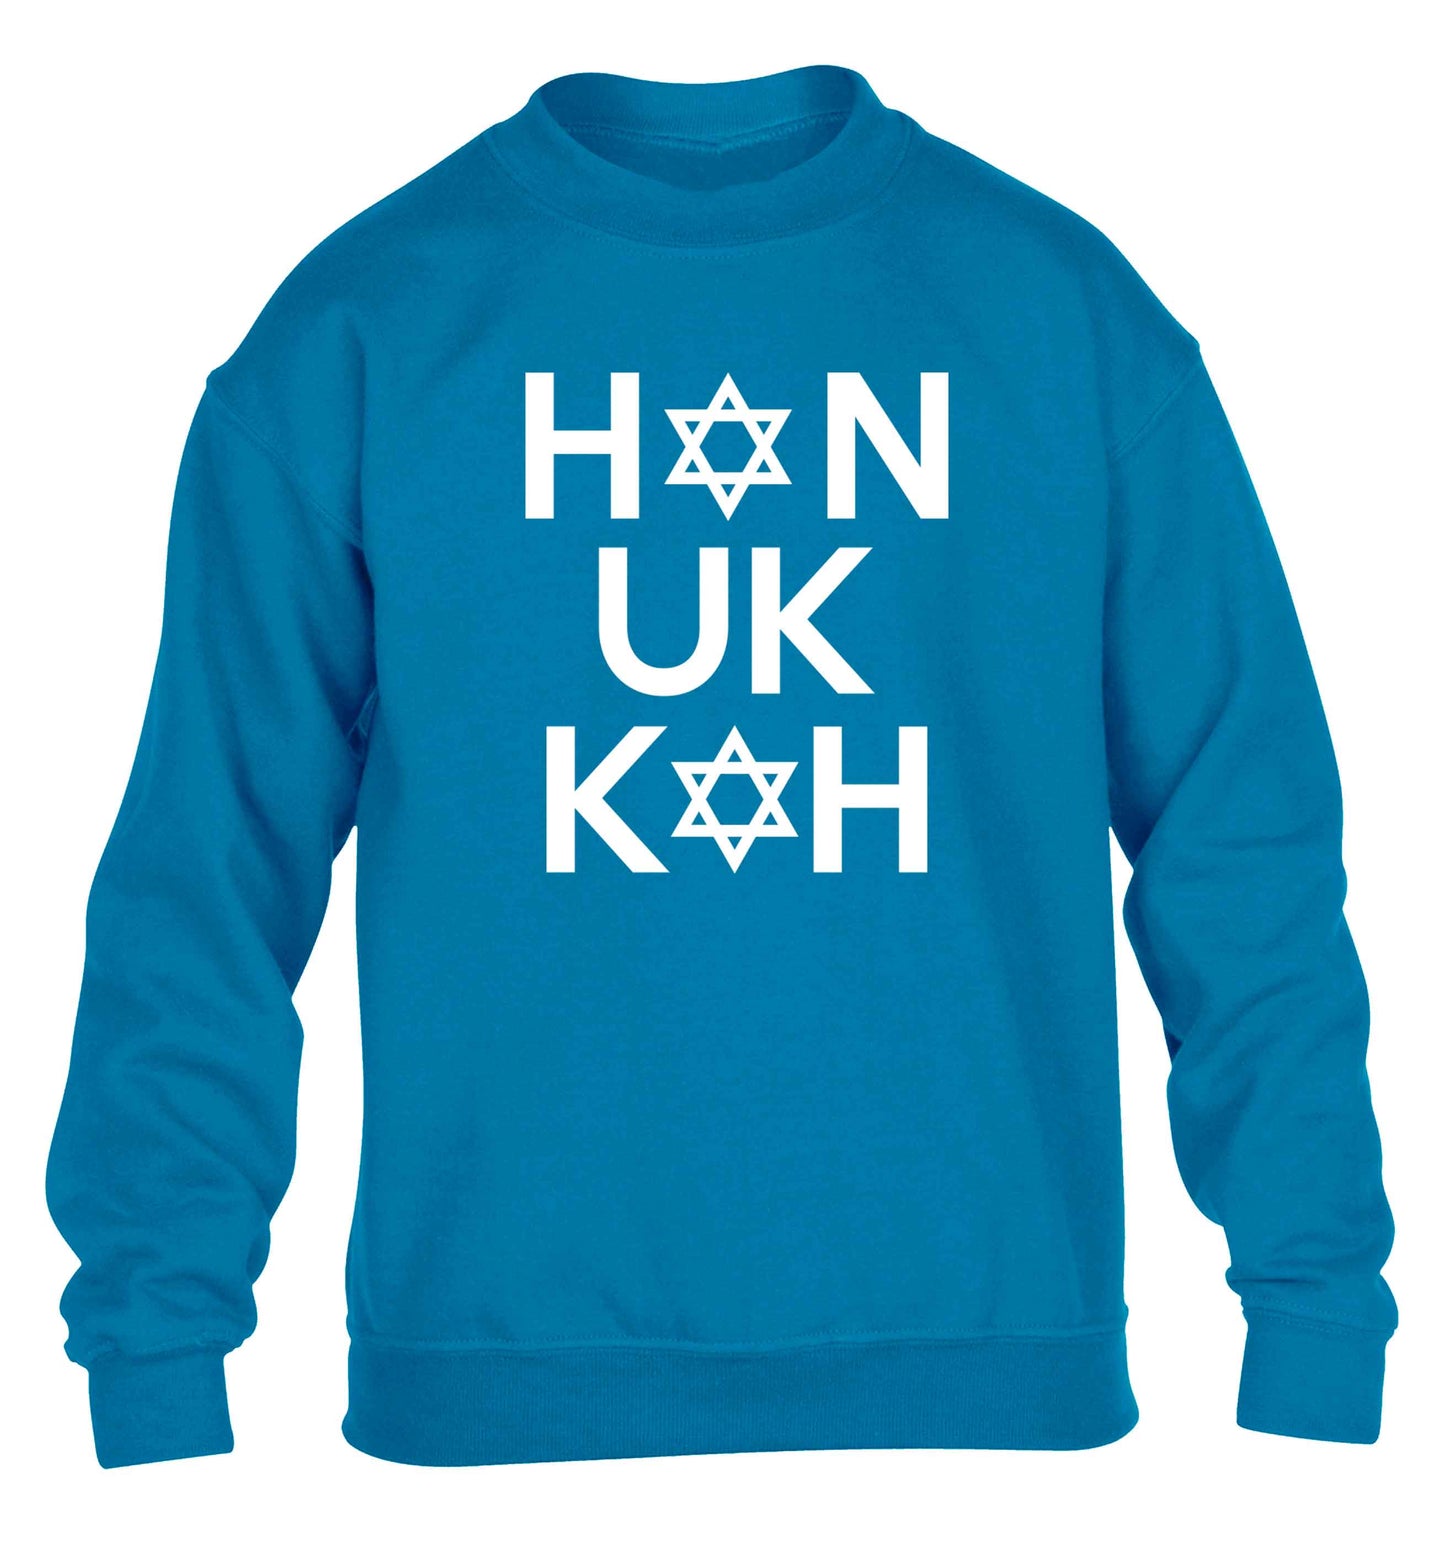 Han uk kah  Hanukkah star of david children's blue sweater 12-13 Years